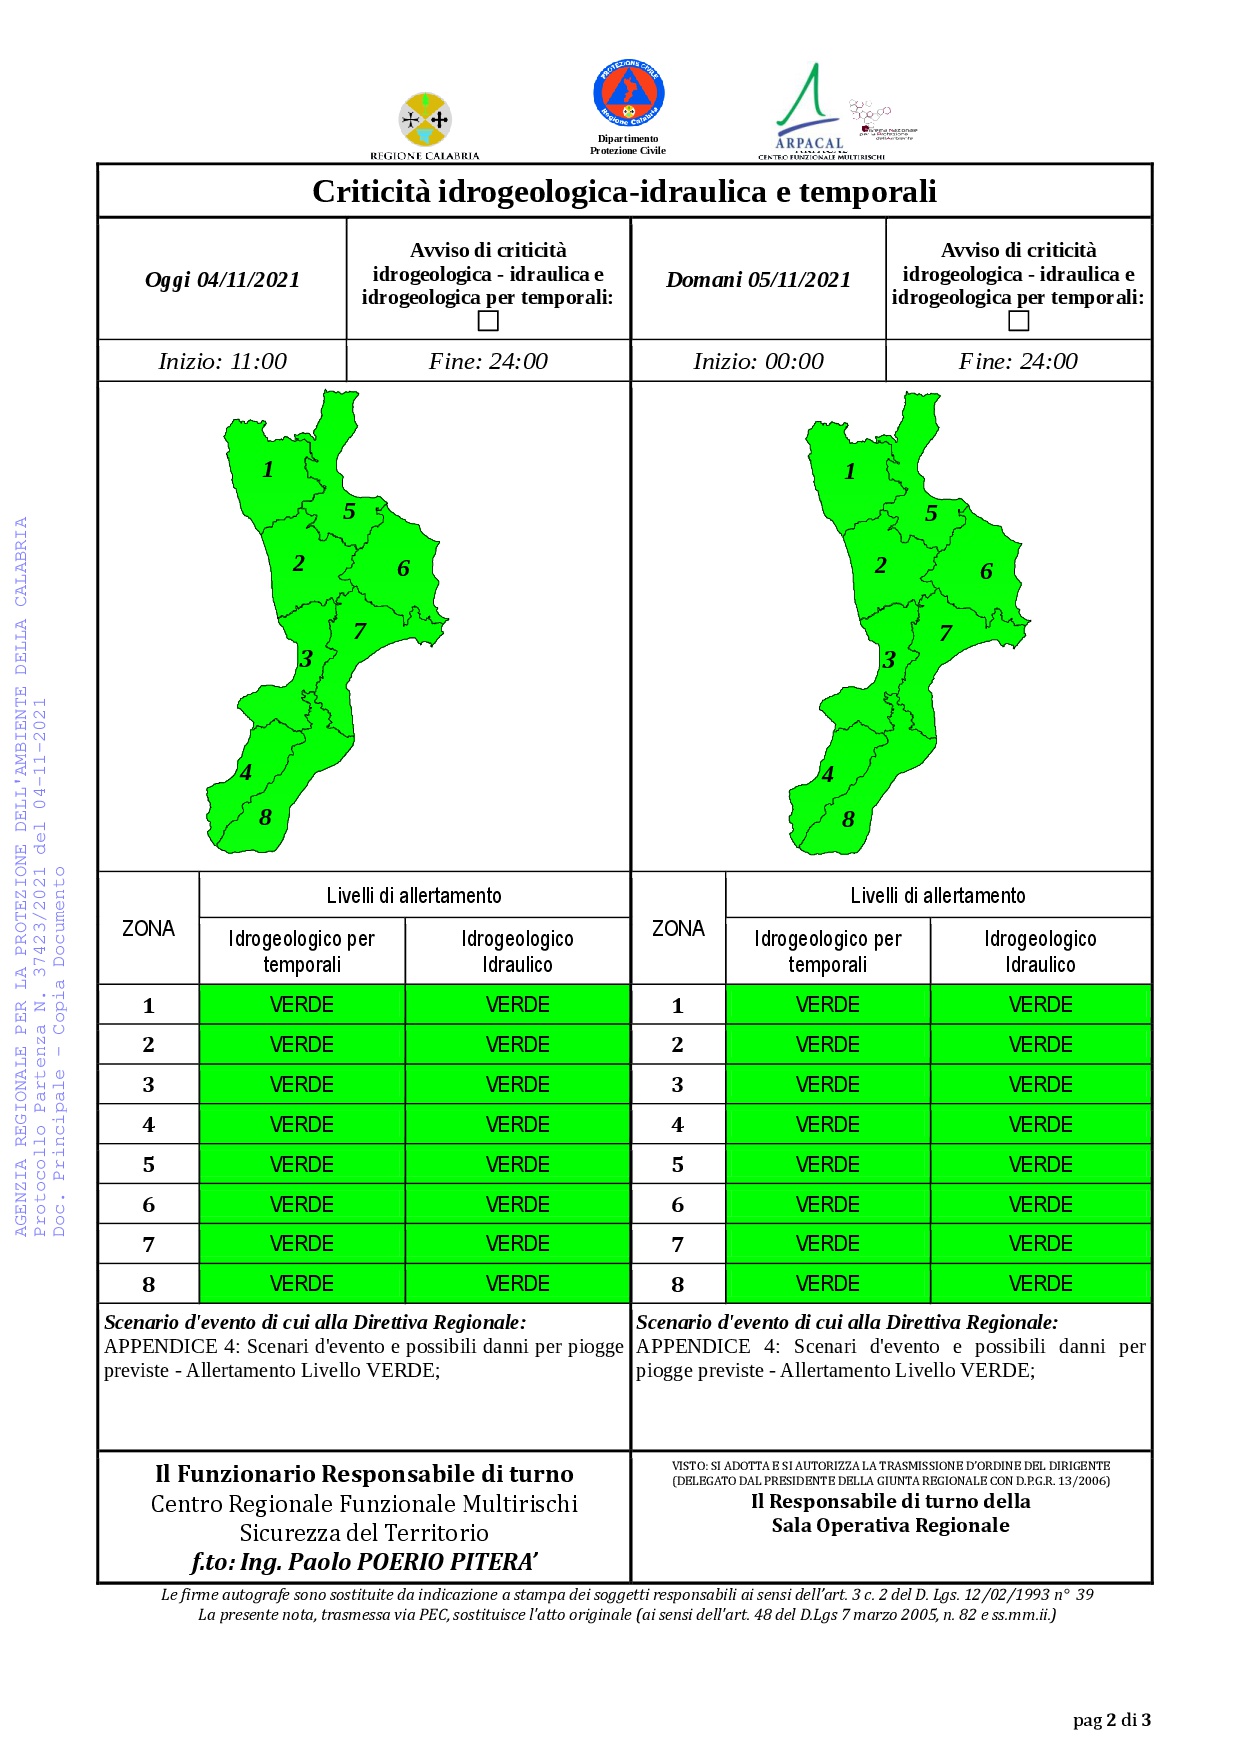 Criticità idrogeologica-idraulica e temporali in Calabria 04-11-2021